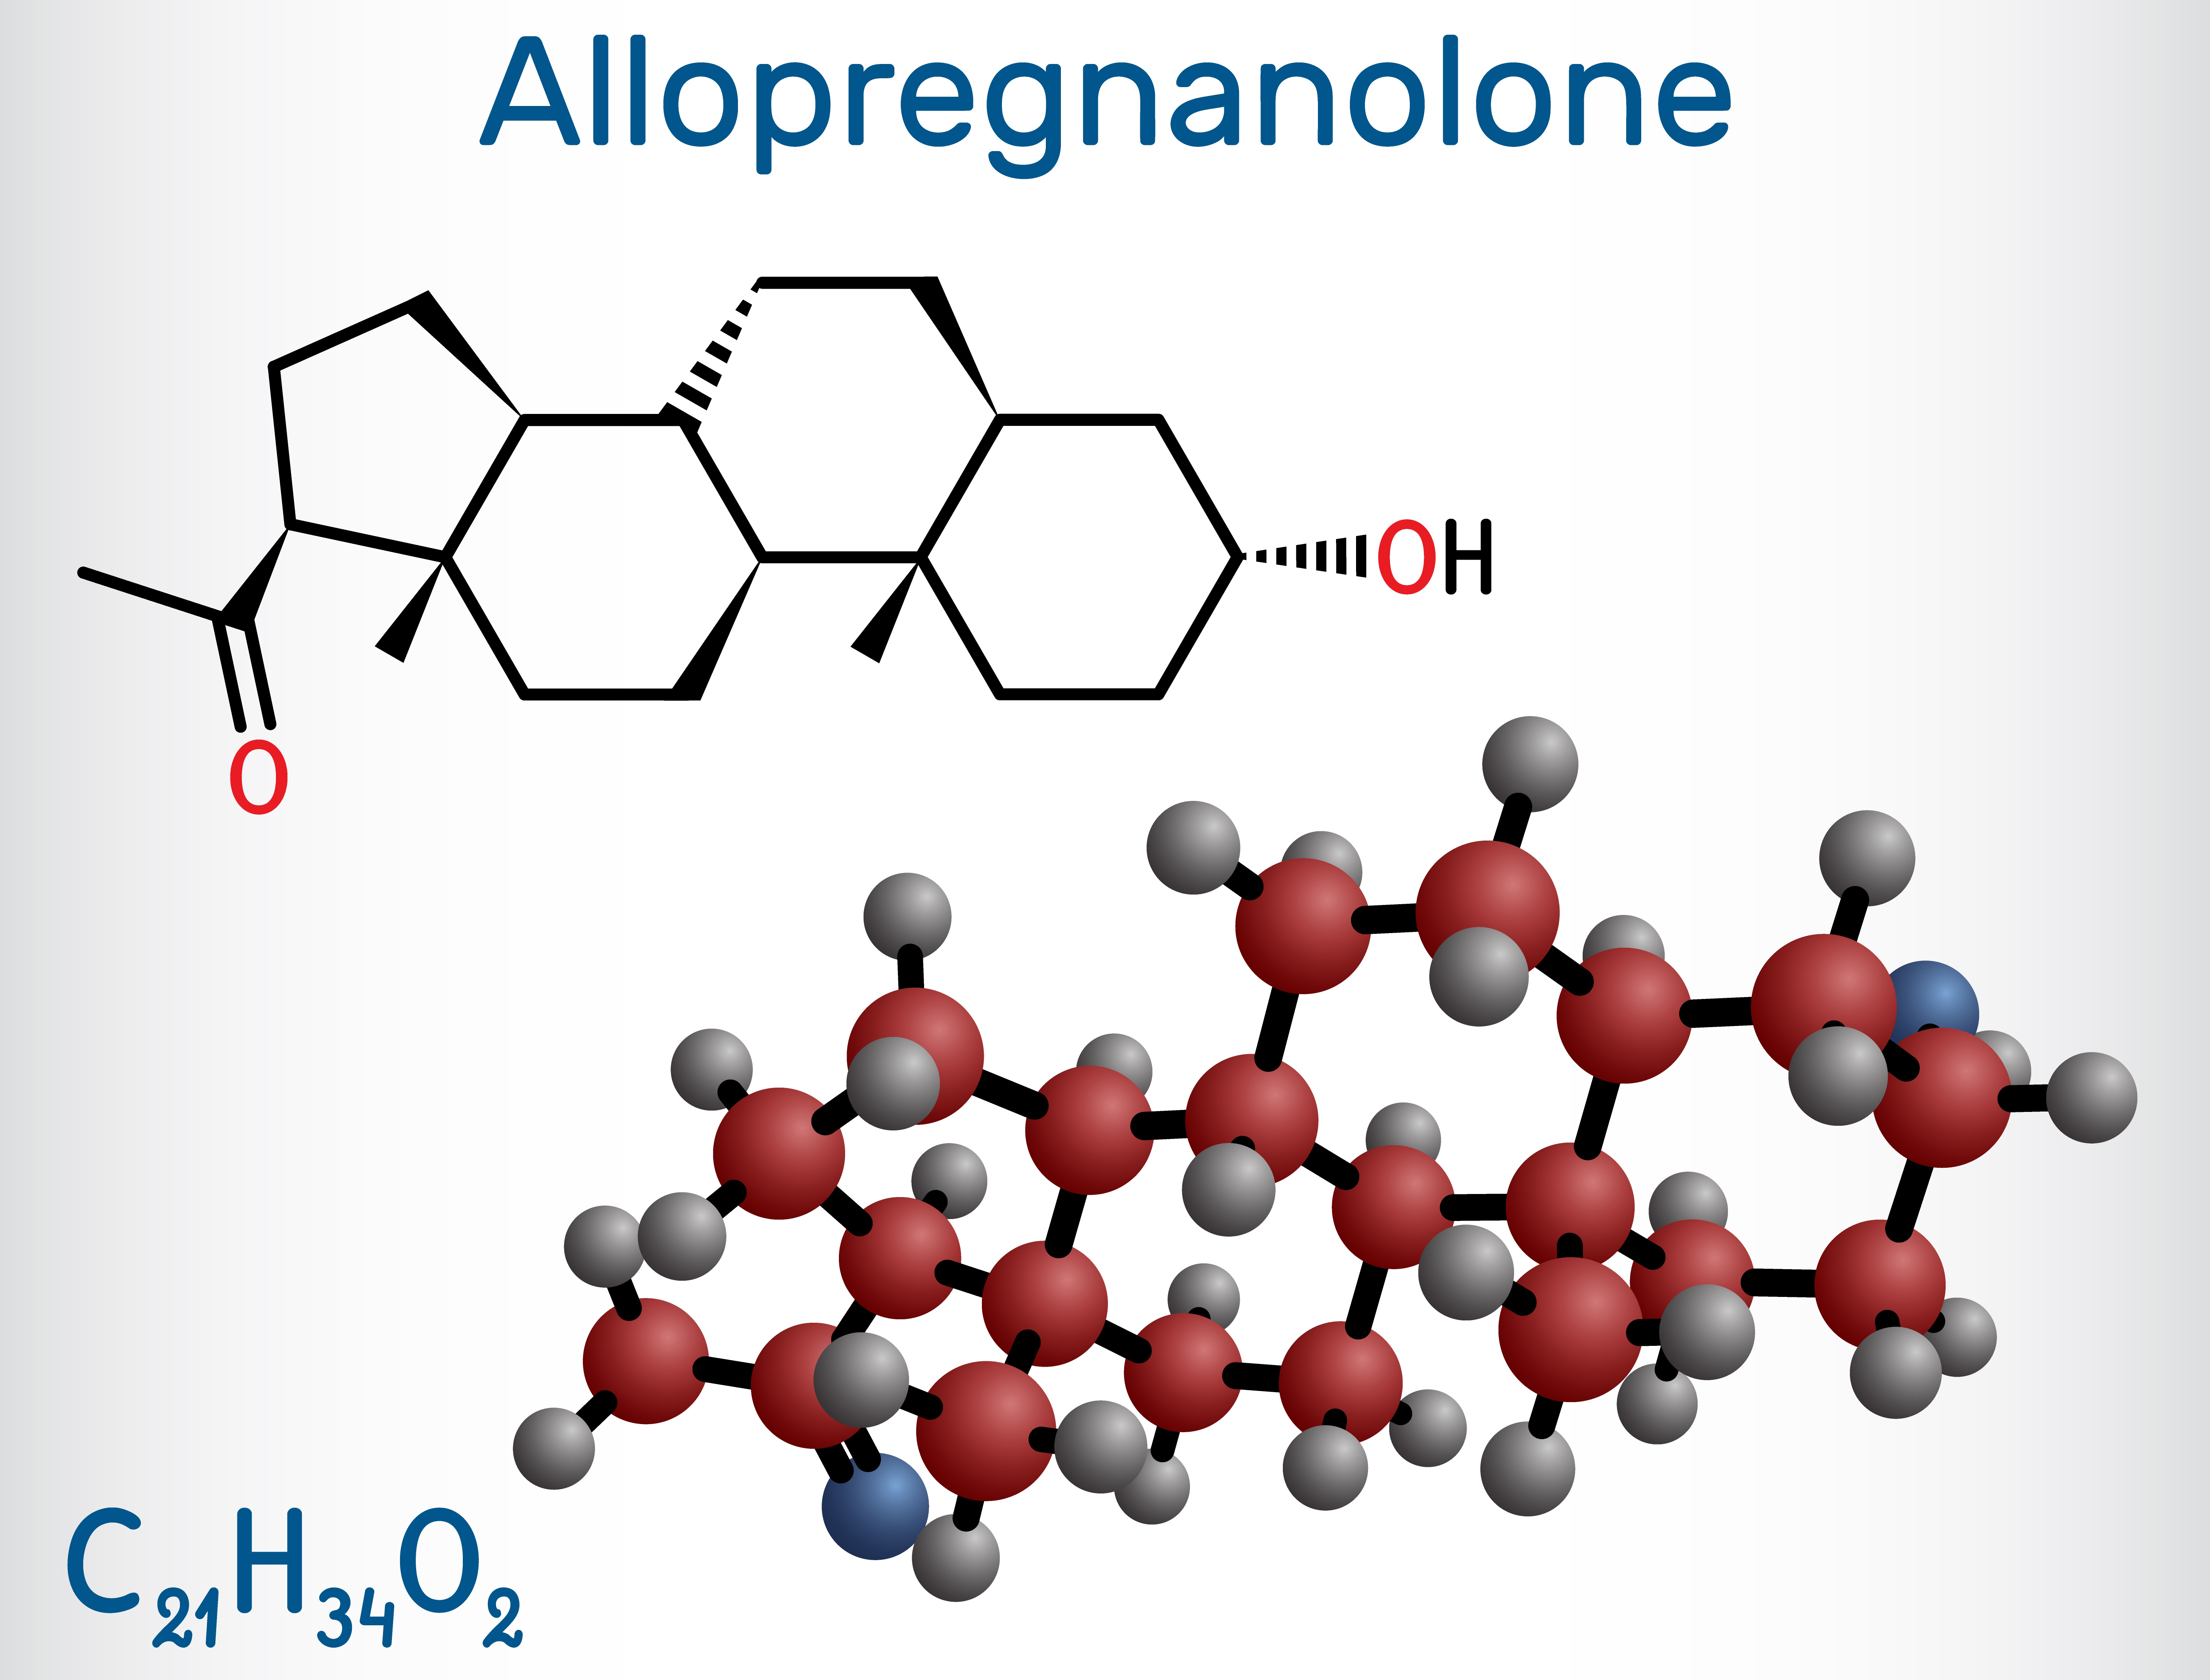 Chemical formula of allopregnanolone (C21 H34 O2) and visualization of allopregnanolone molecule.